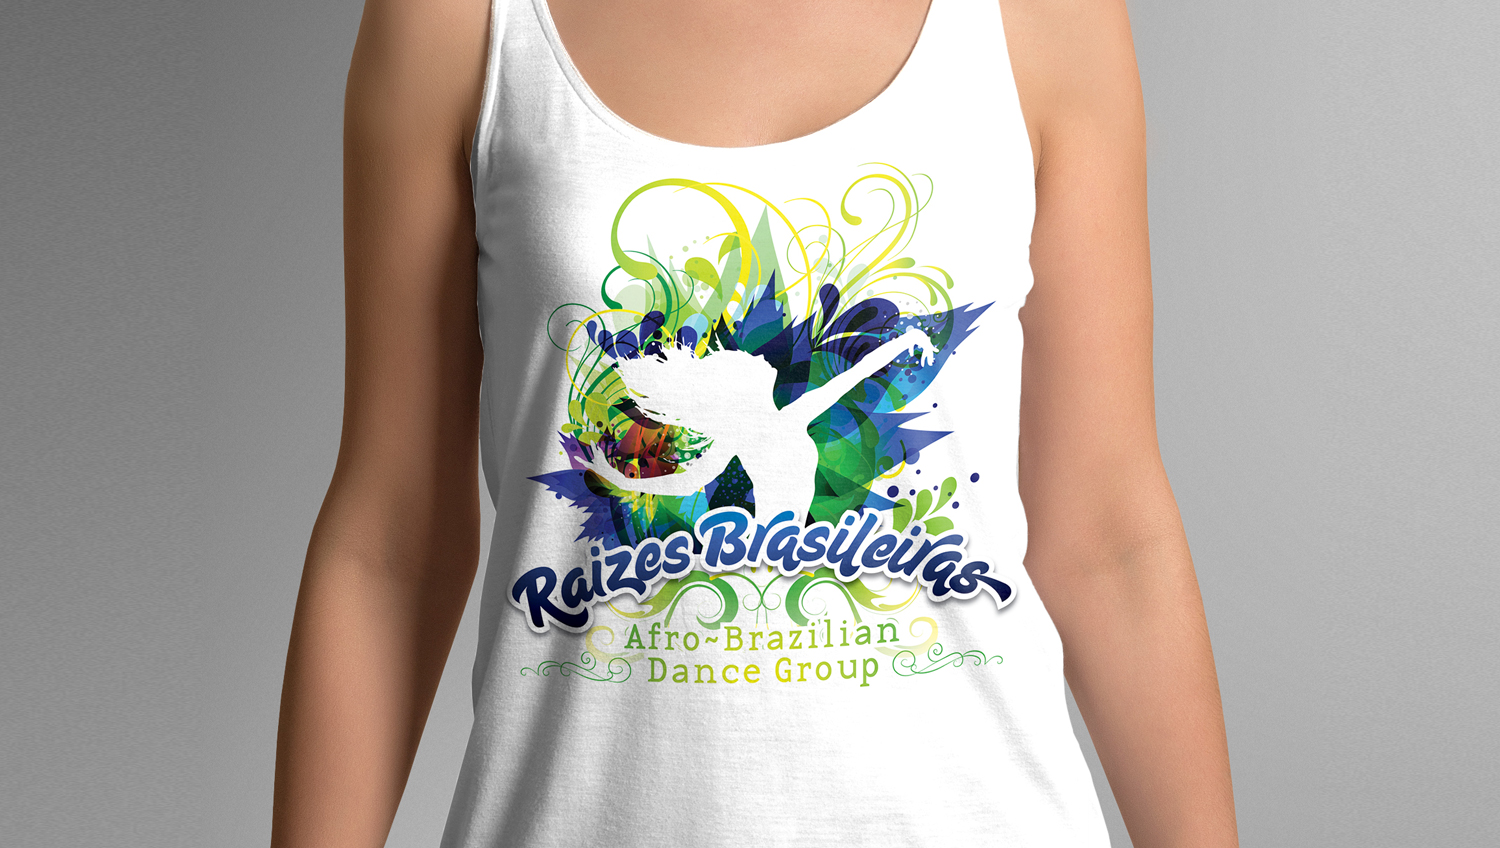 Raizes-Brasileiras Afro Brazilian Dance Group logo - Main Image